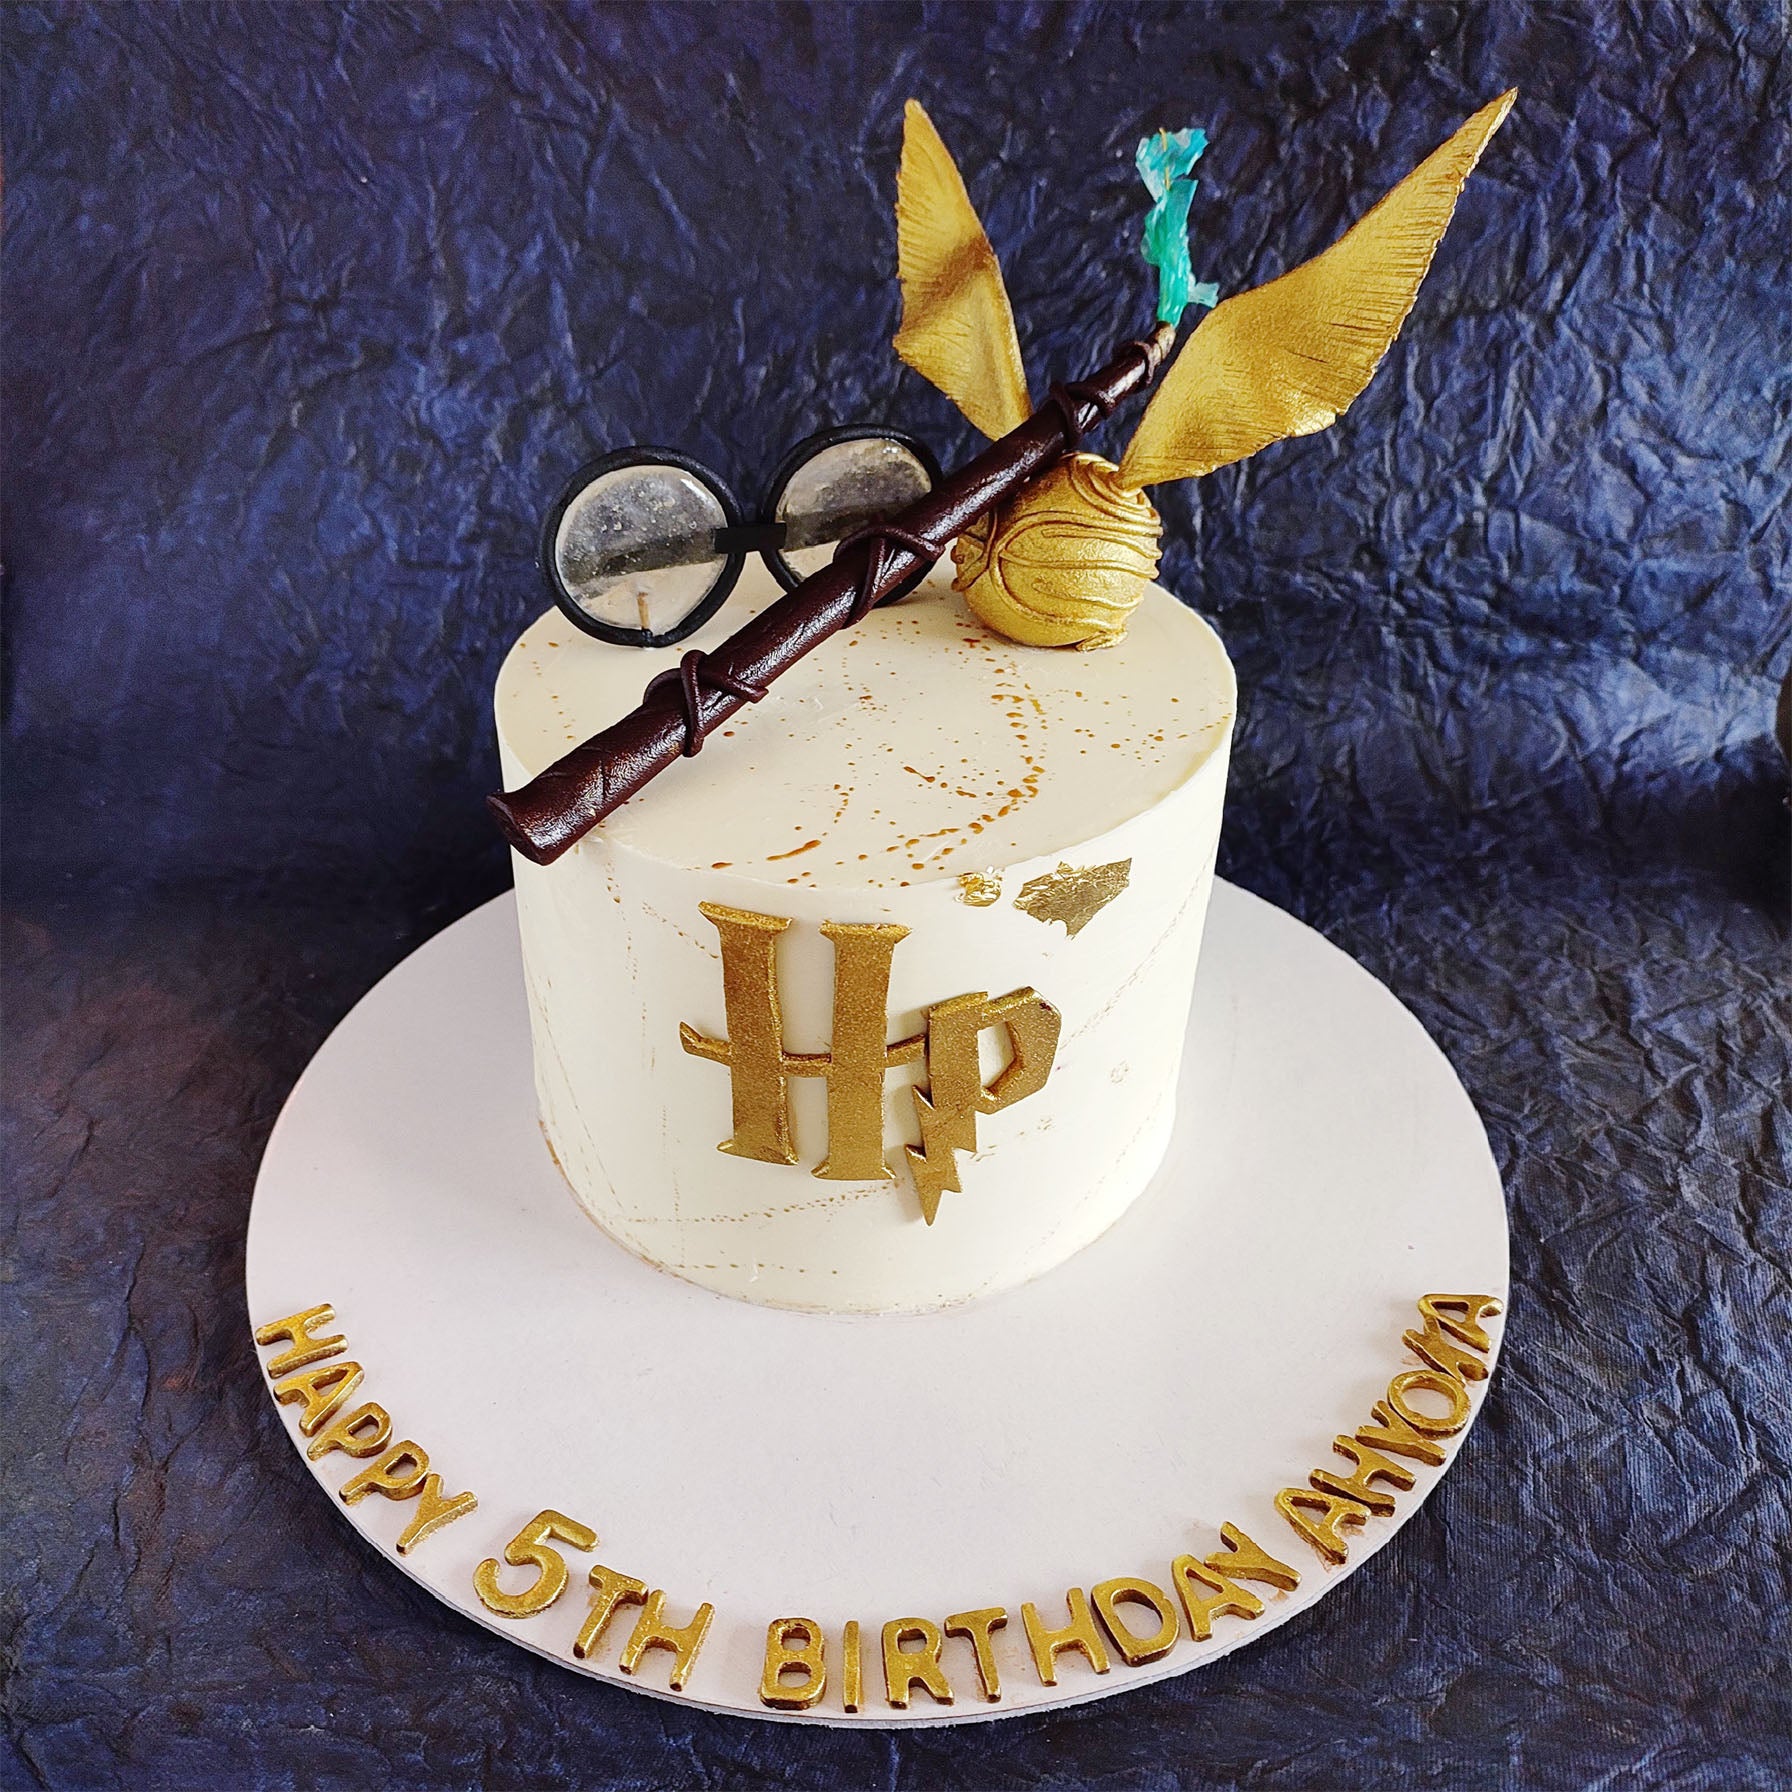 Harry Potter Cake Tutorial | How To | Cherry School - YouTube